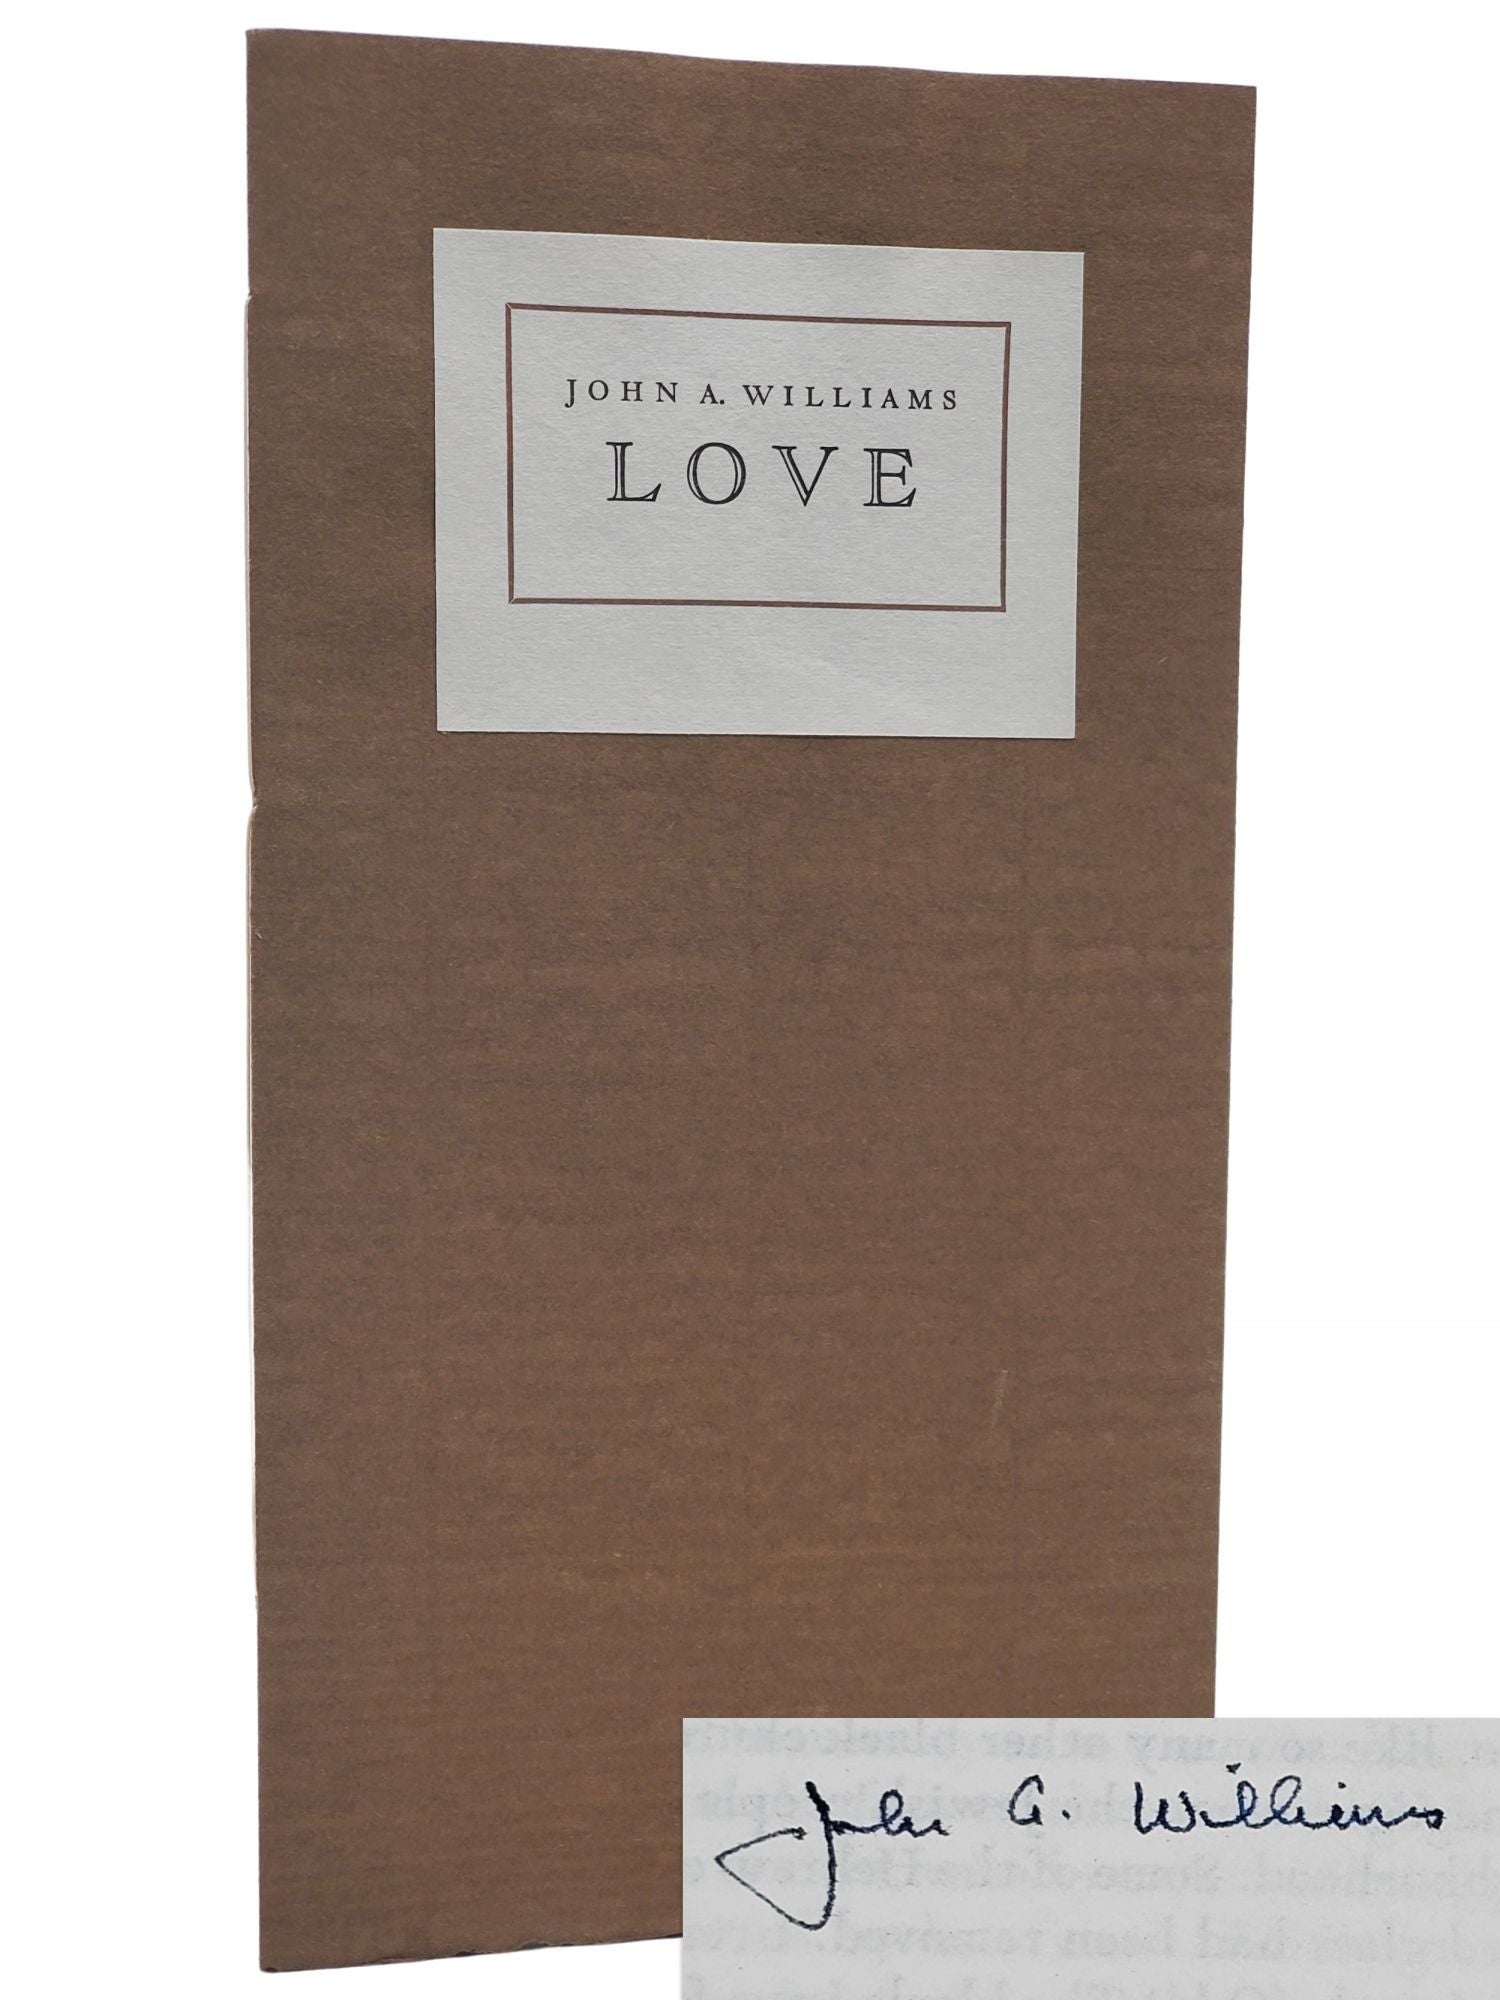 [Book #349] LOVE. John A. Williams.